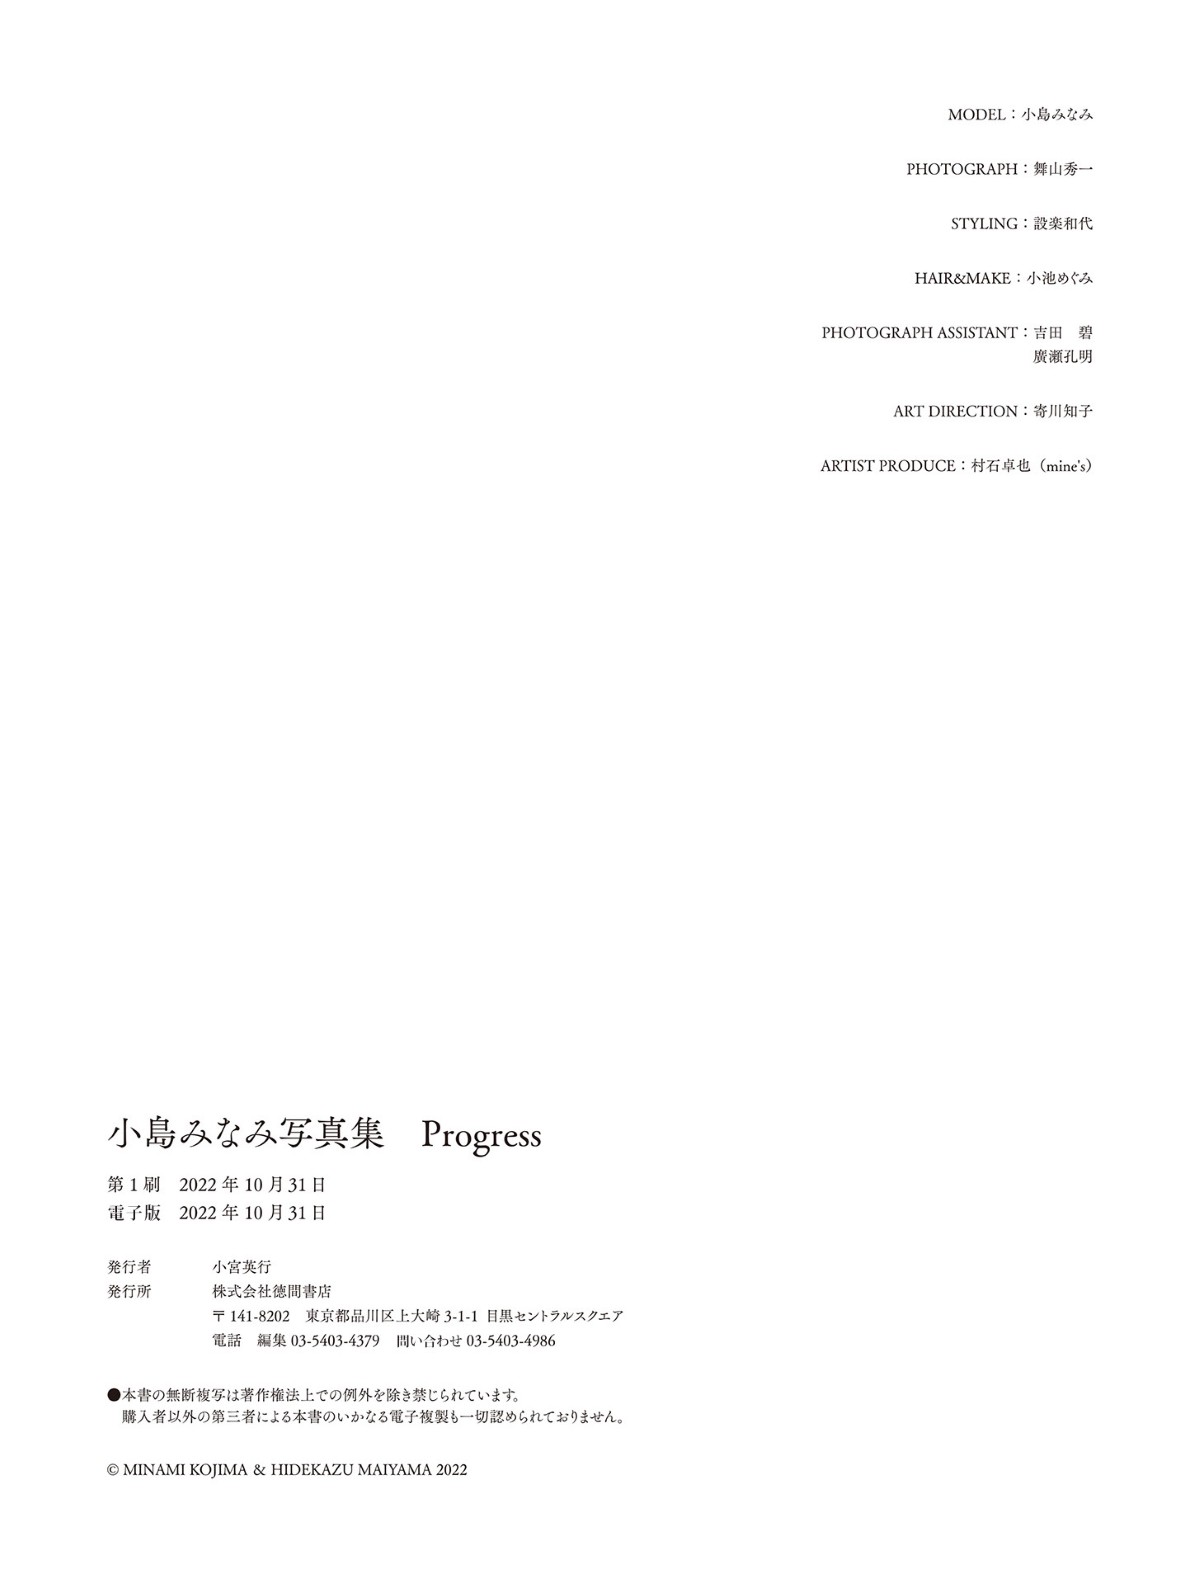 Photobook 2022 10 31 Minami Kojima 小島みなみ Progress Full 0081 0118297665.jpg